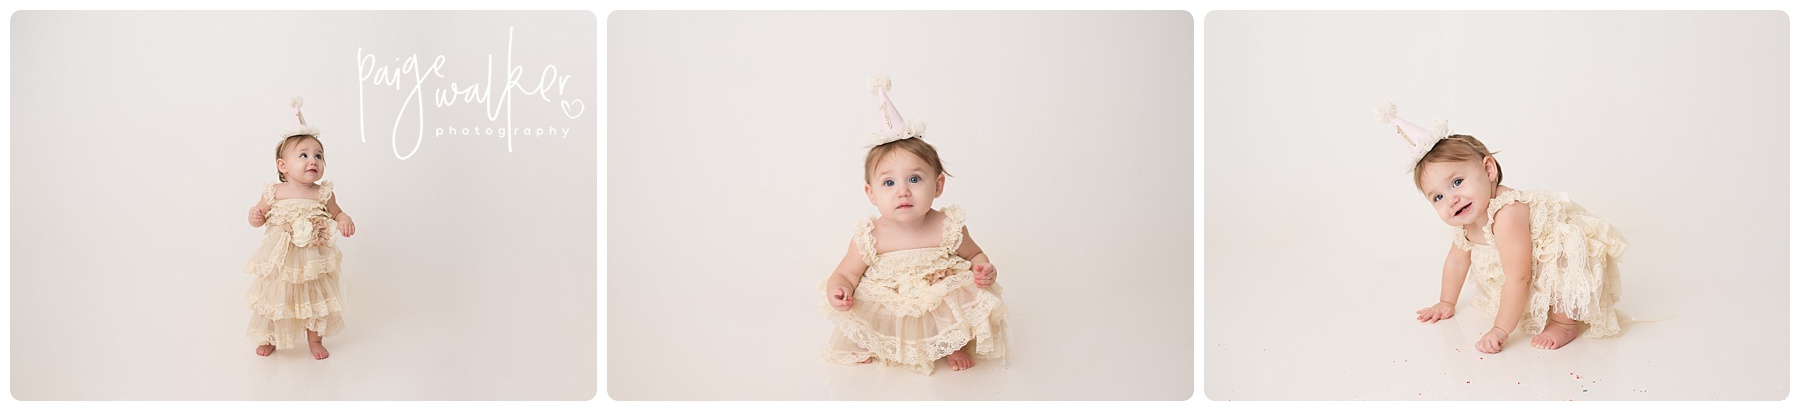 baby girl in a white ruffle dress